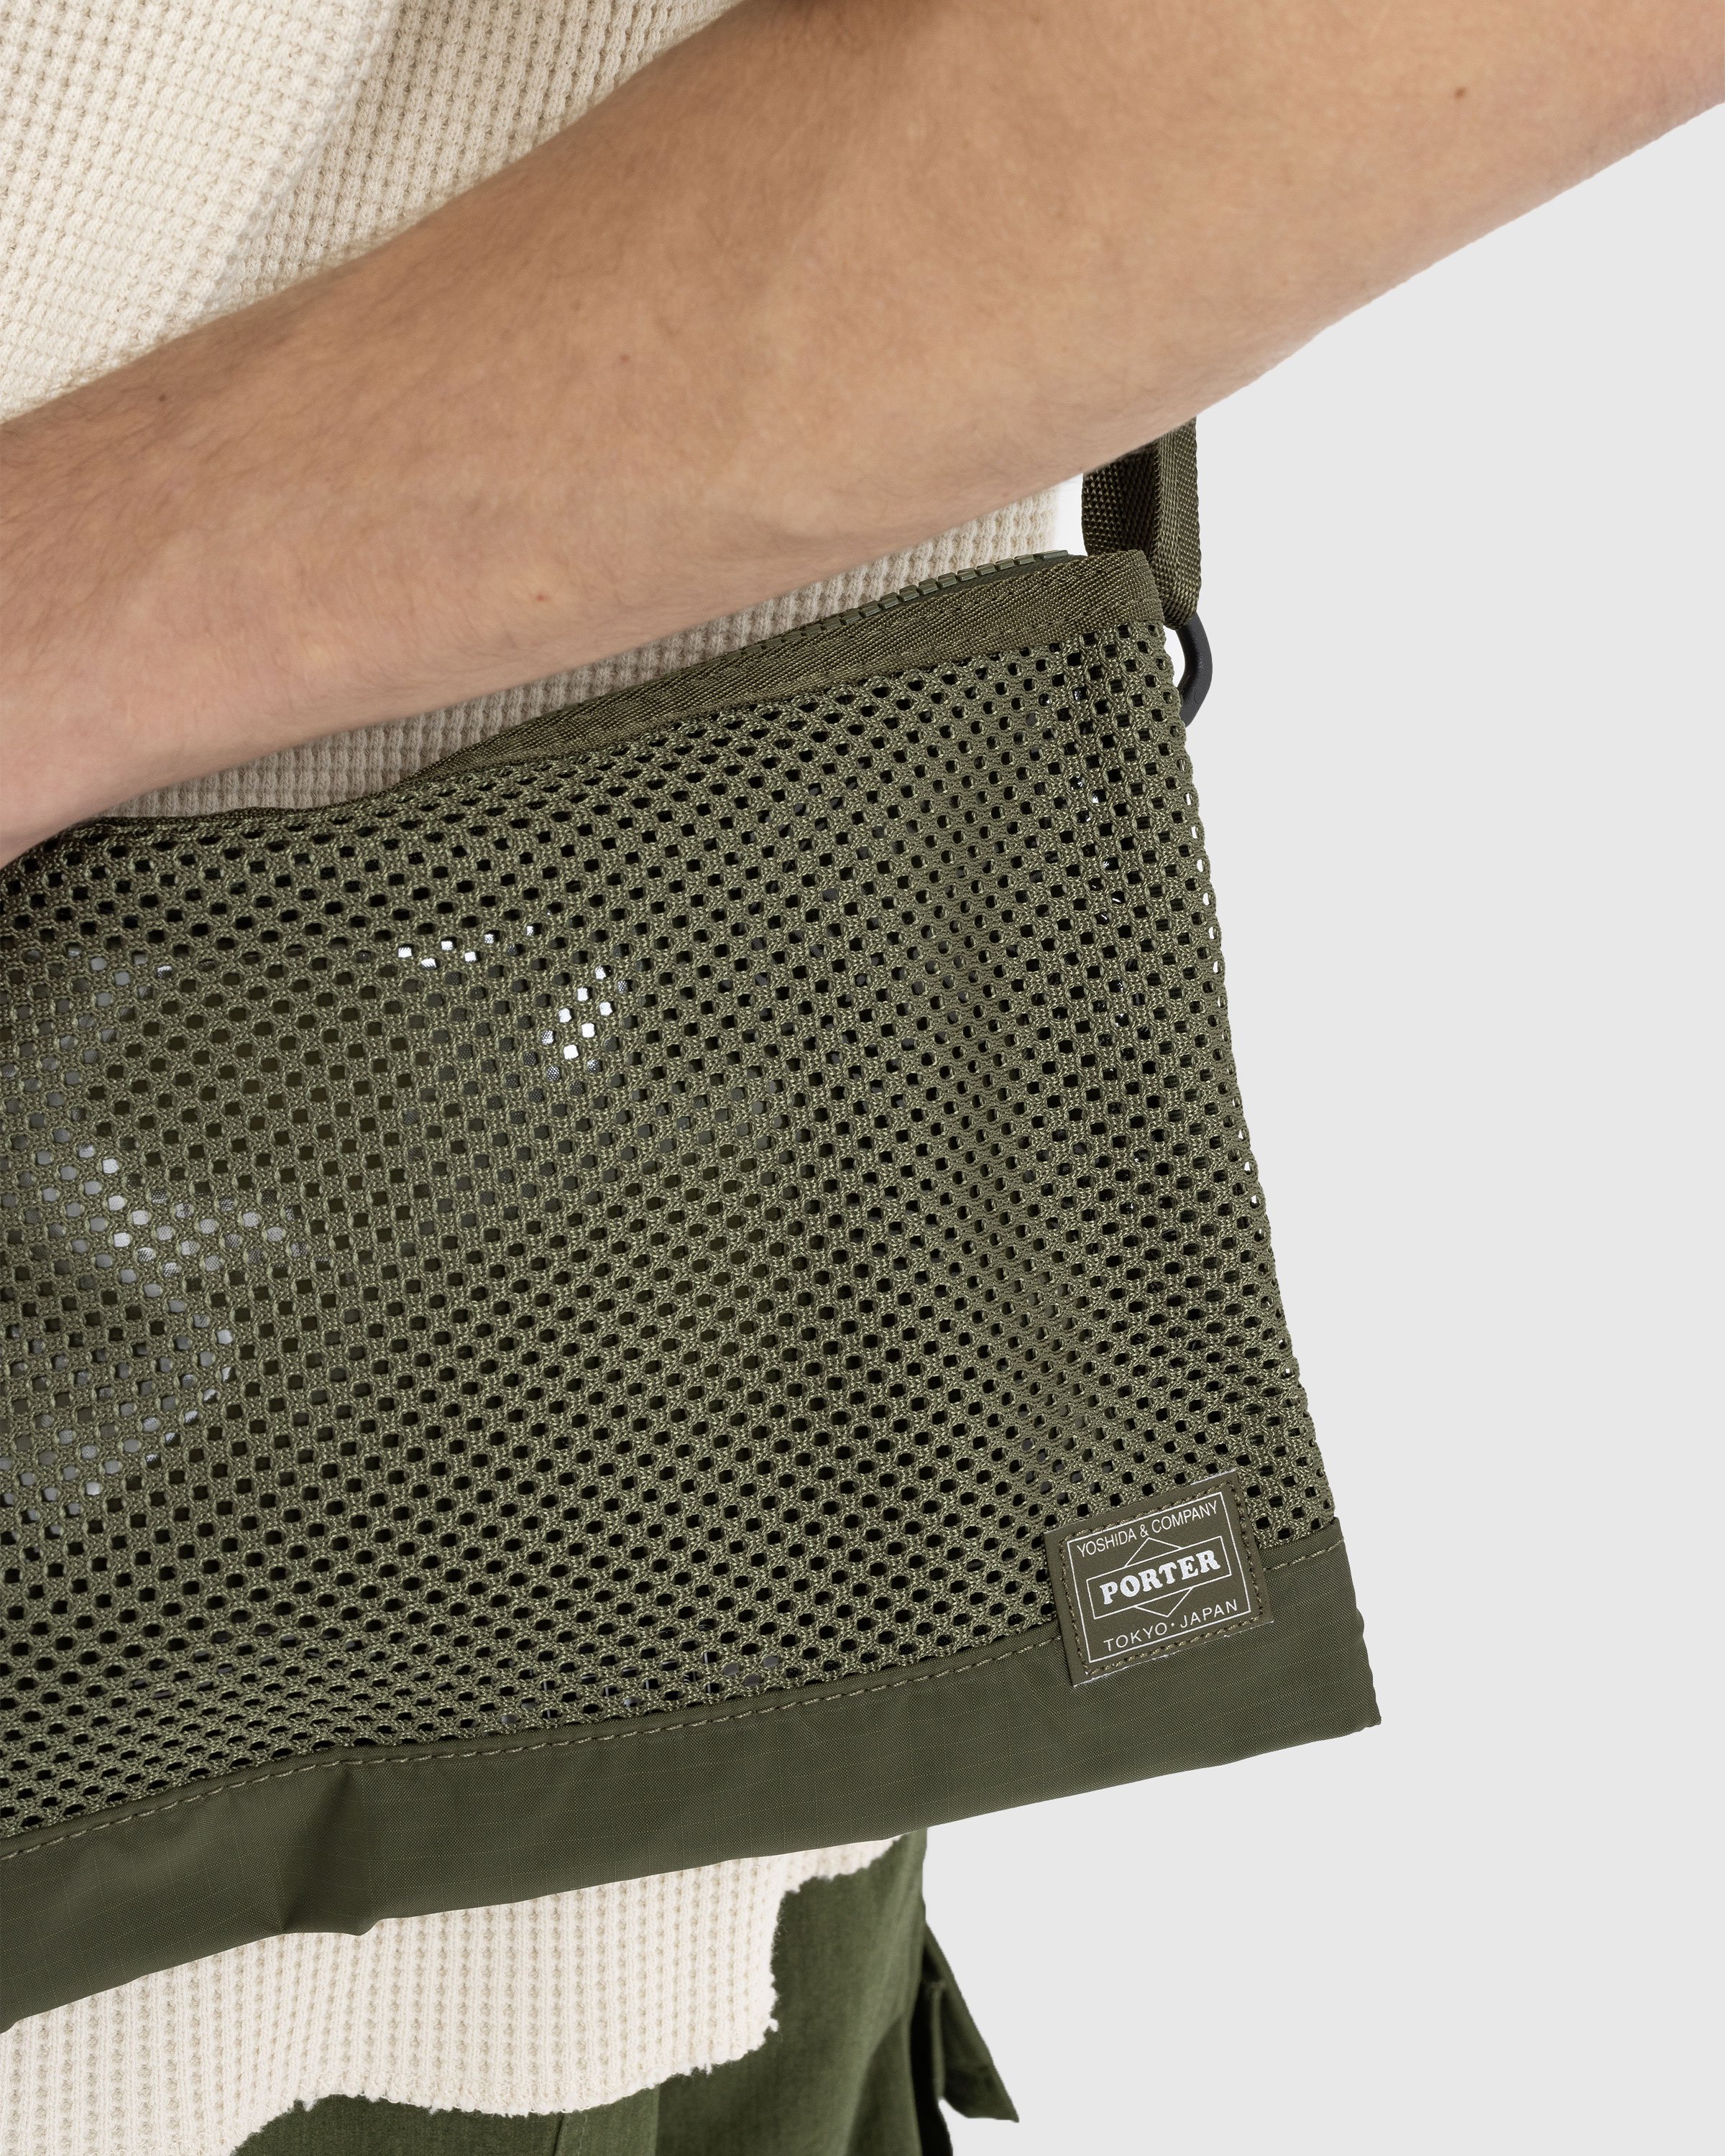 Porter-Yoshida & Co. - Sacoche Screen Shoulder Bag Green - Accessories - Green - Image 3